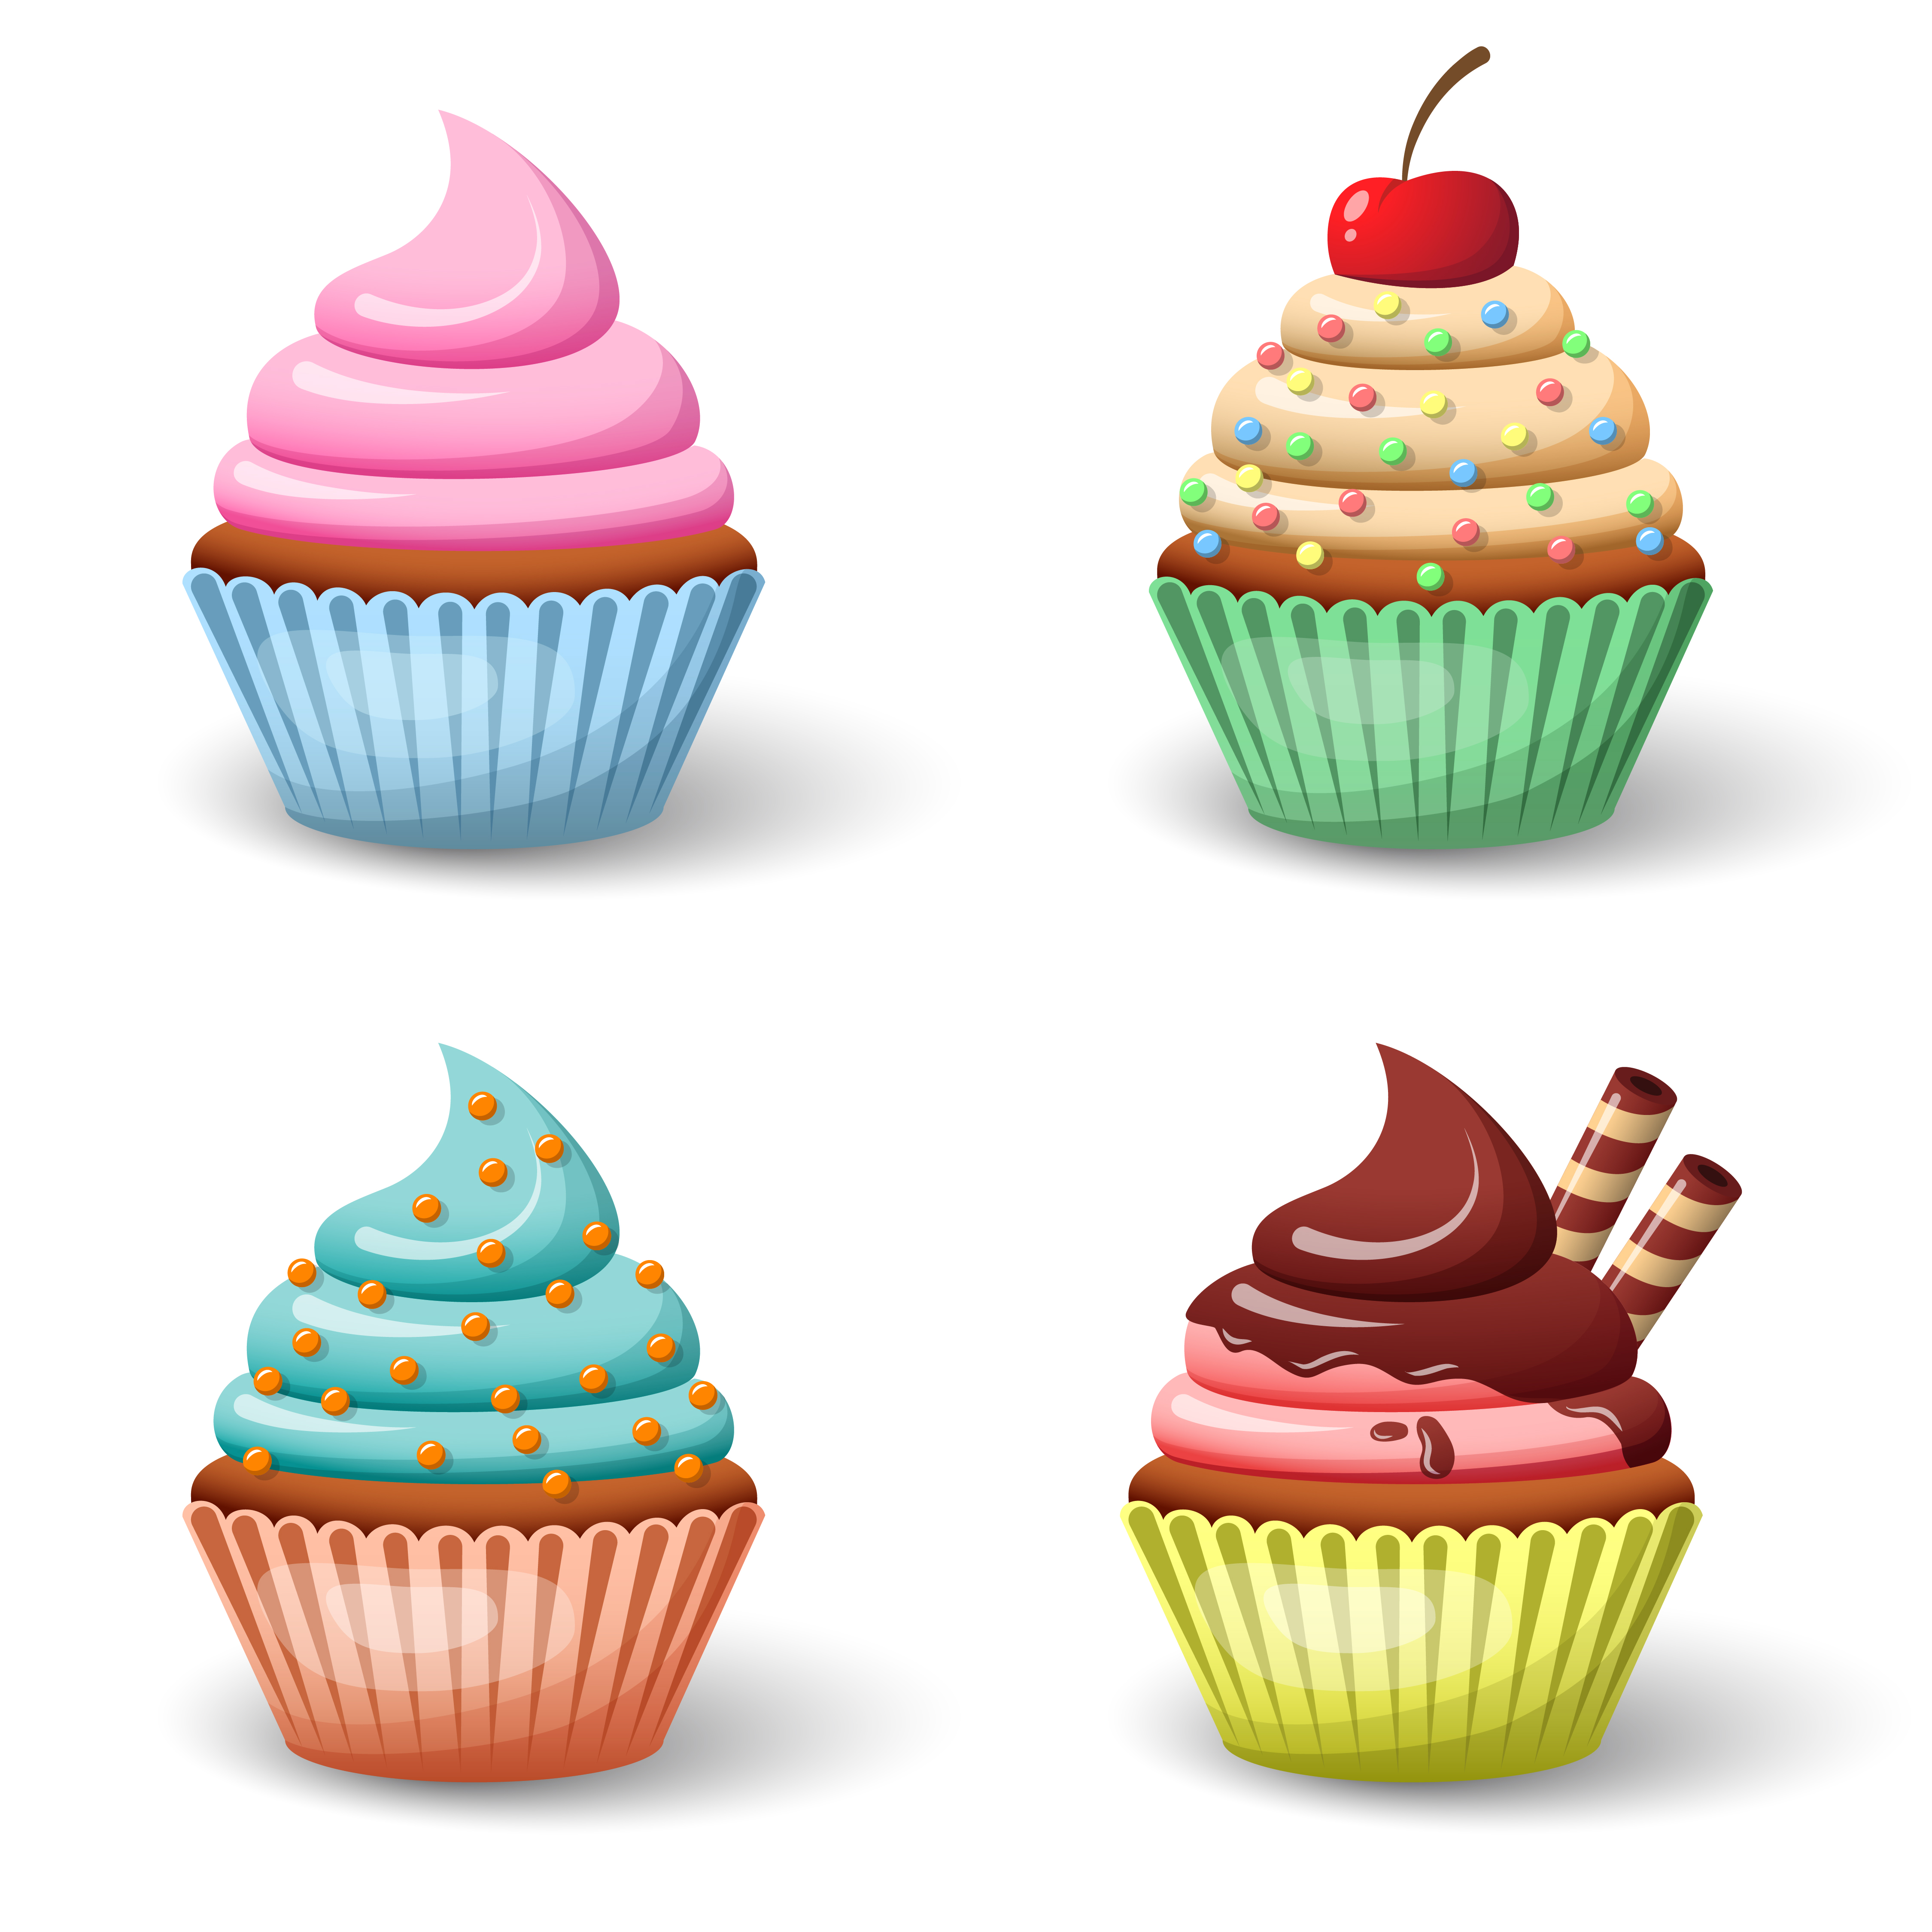 Sweet cupcake set - Download Free Vectors, Clipart ...